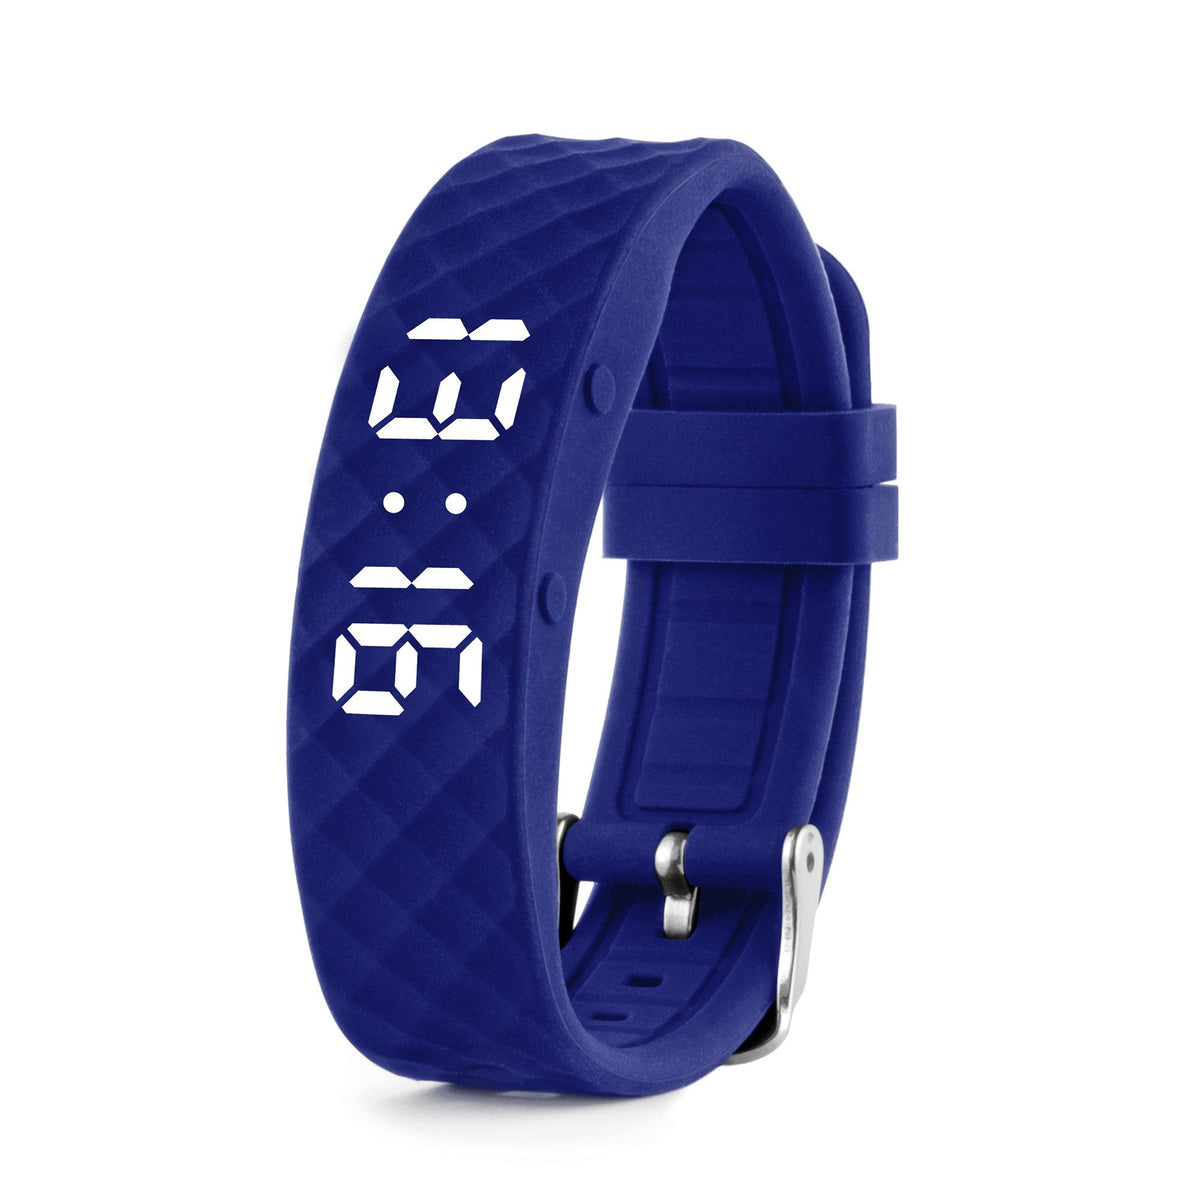 Blue sillicone watch with digital display